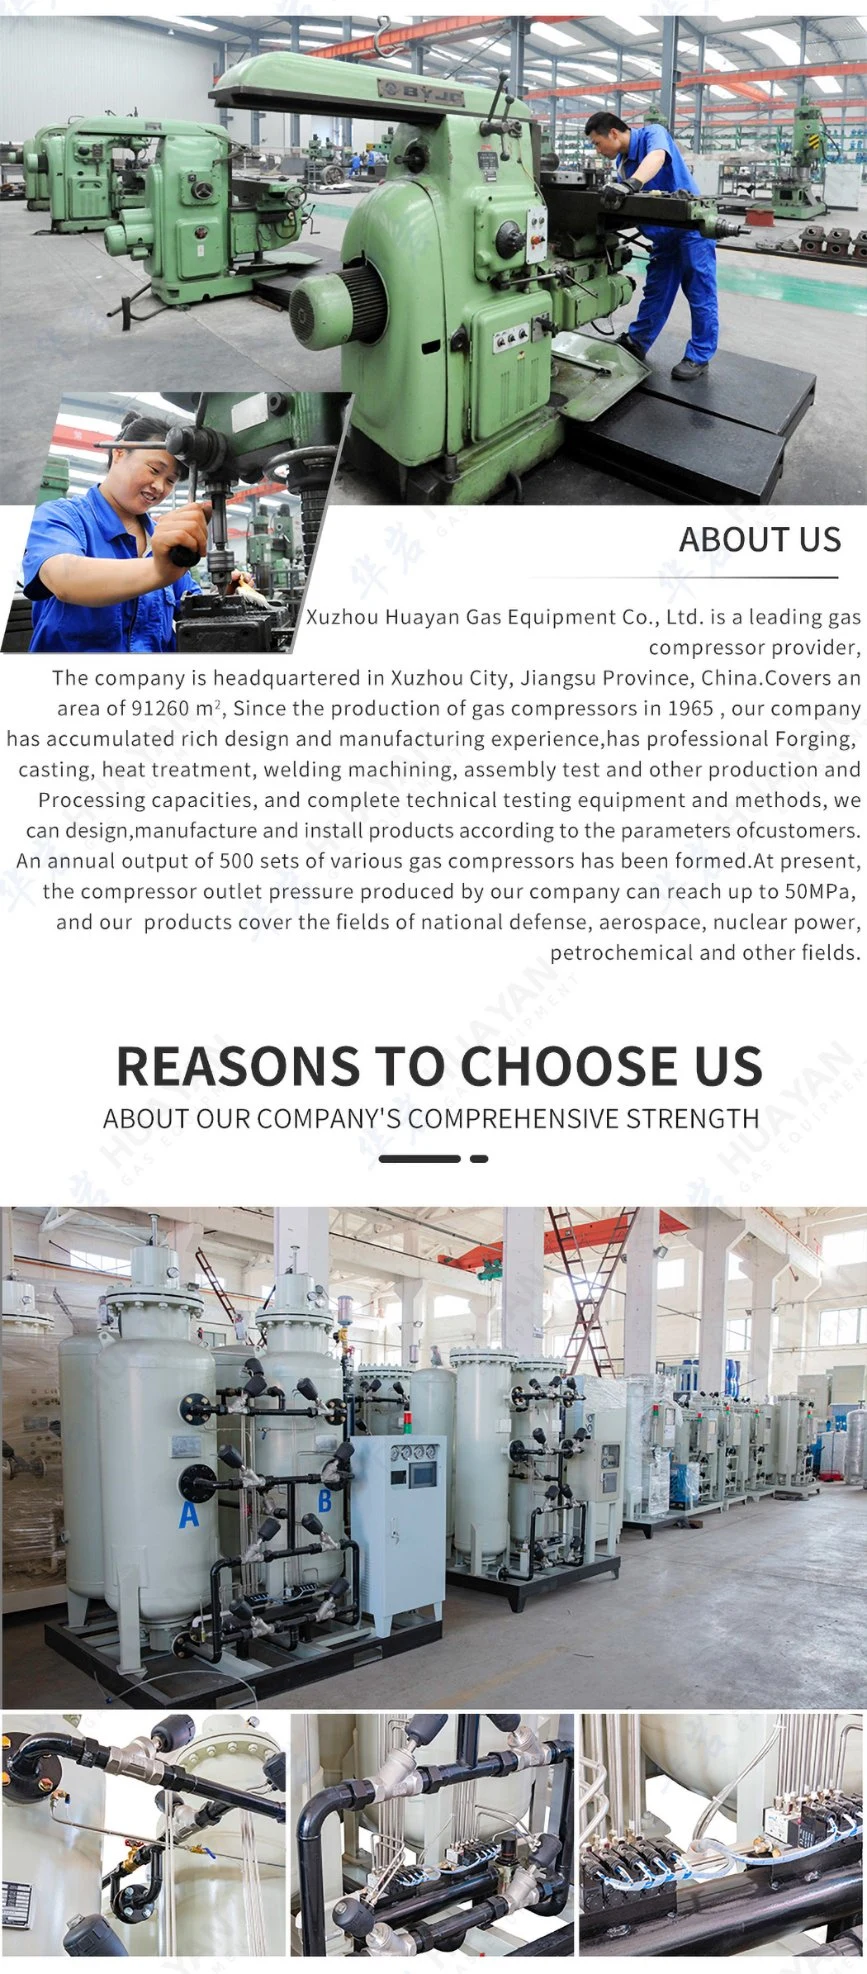 Hyo-5 Psa Industrial Oxygen Plant Medical Oxygen Filling System Oxygen Generator